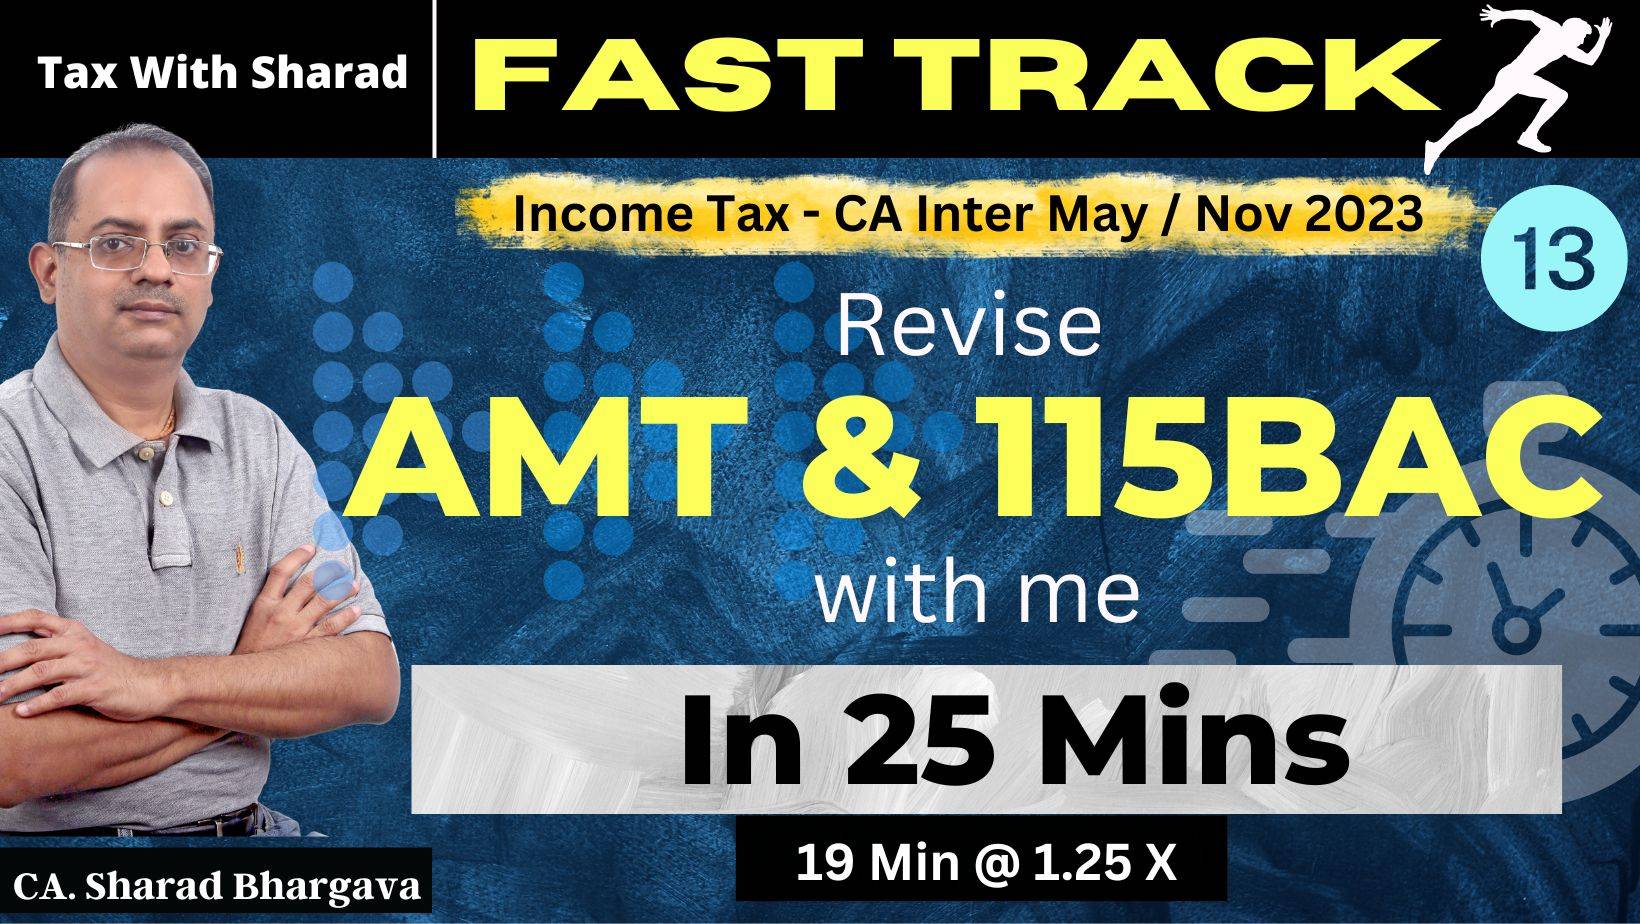 Fast Track Revision (DT) / 13 - AMT & Tax u/s 115BAC / CA Inter May/ Nov 2023 / CA. Sharad Bhargava